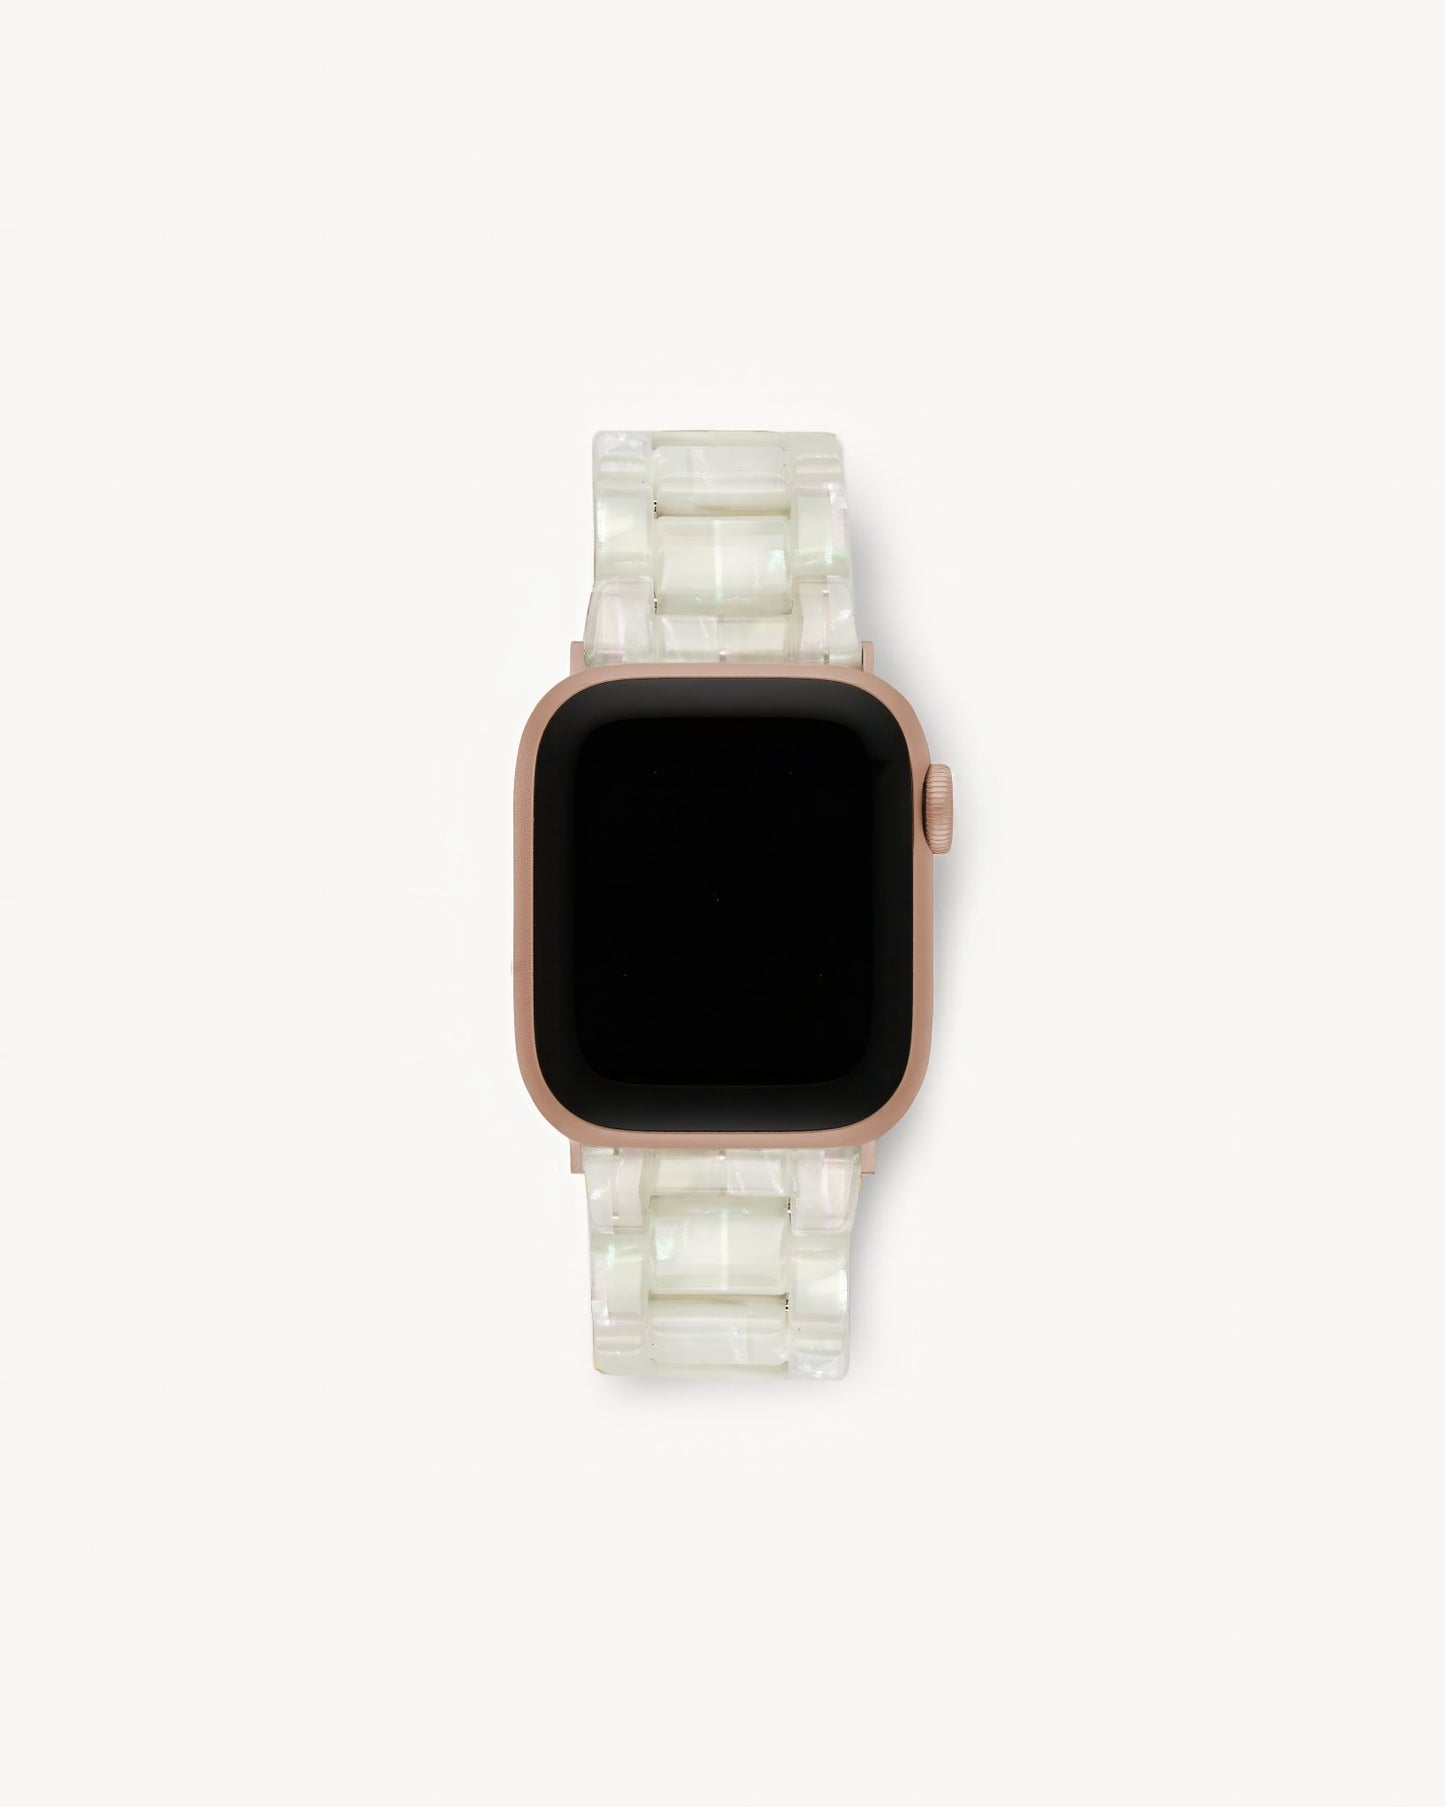 Apple Watch Band in Opalite Shell Checker - MACHETE